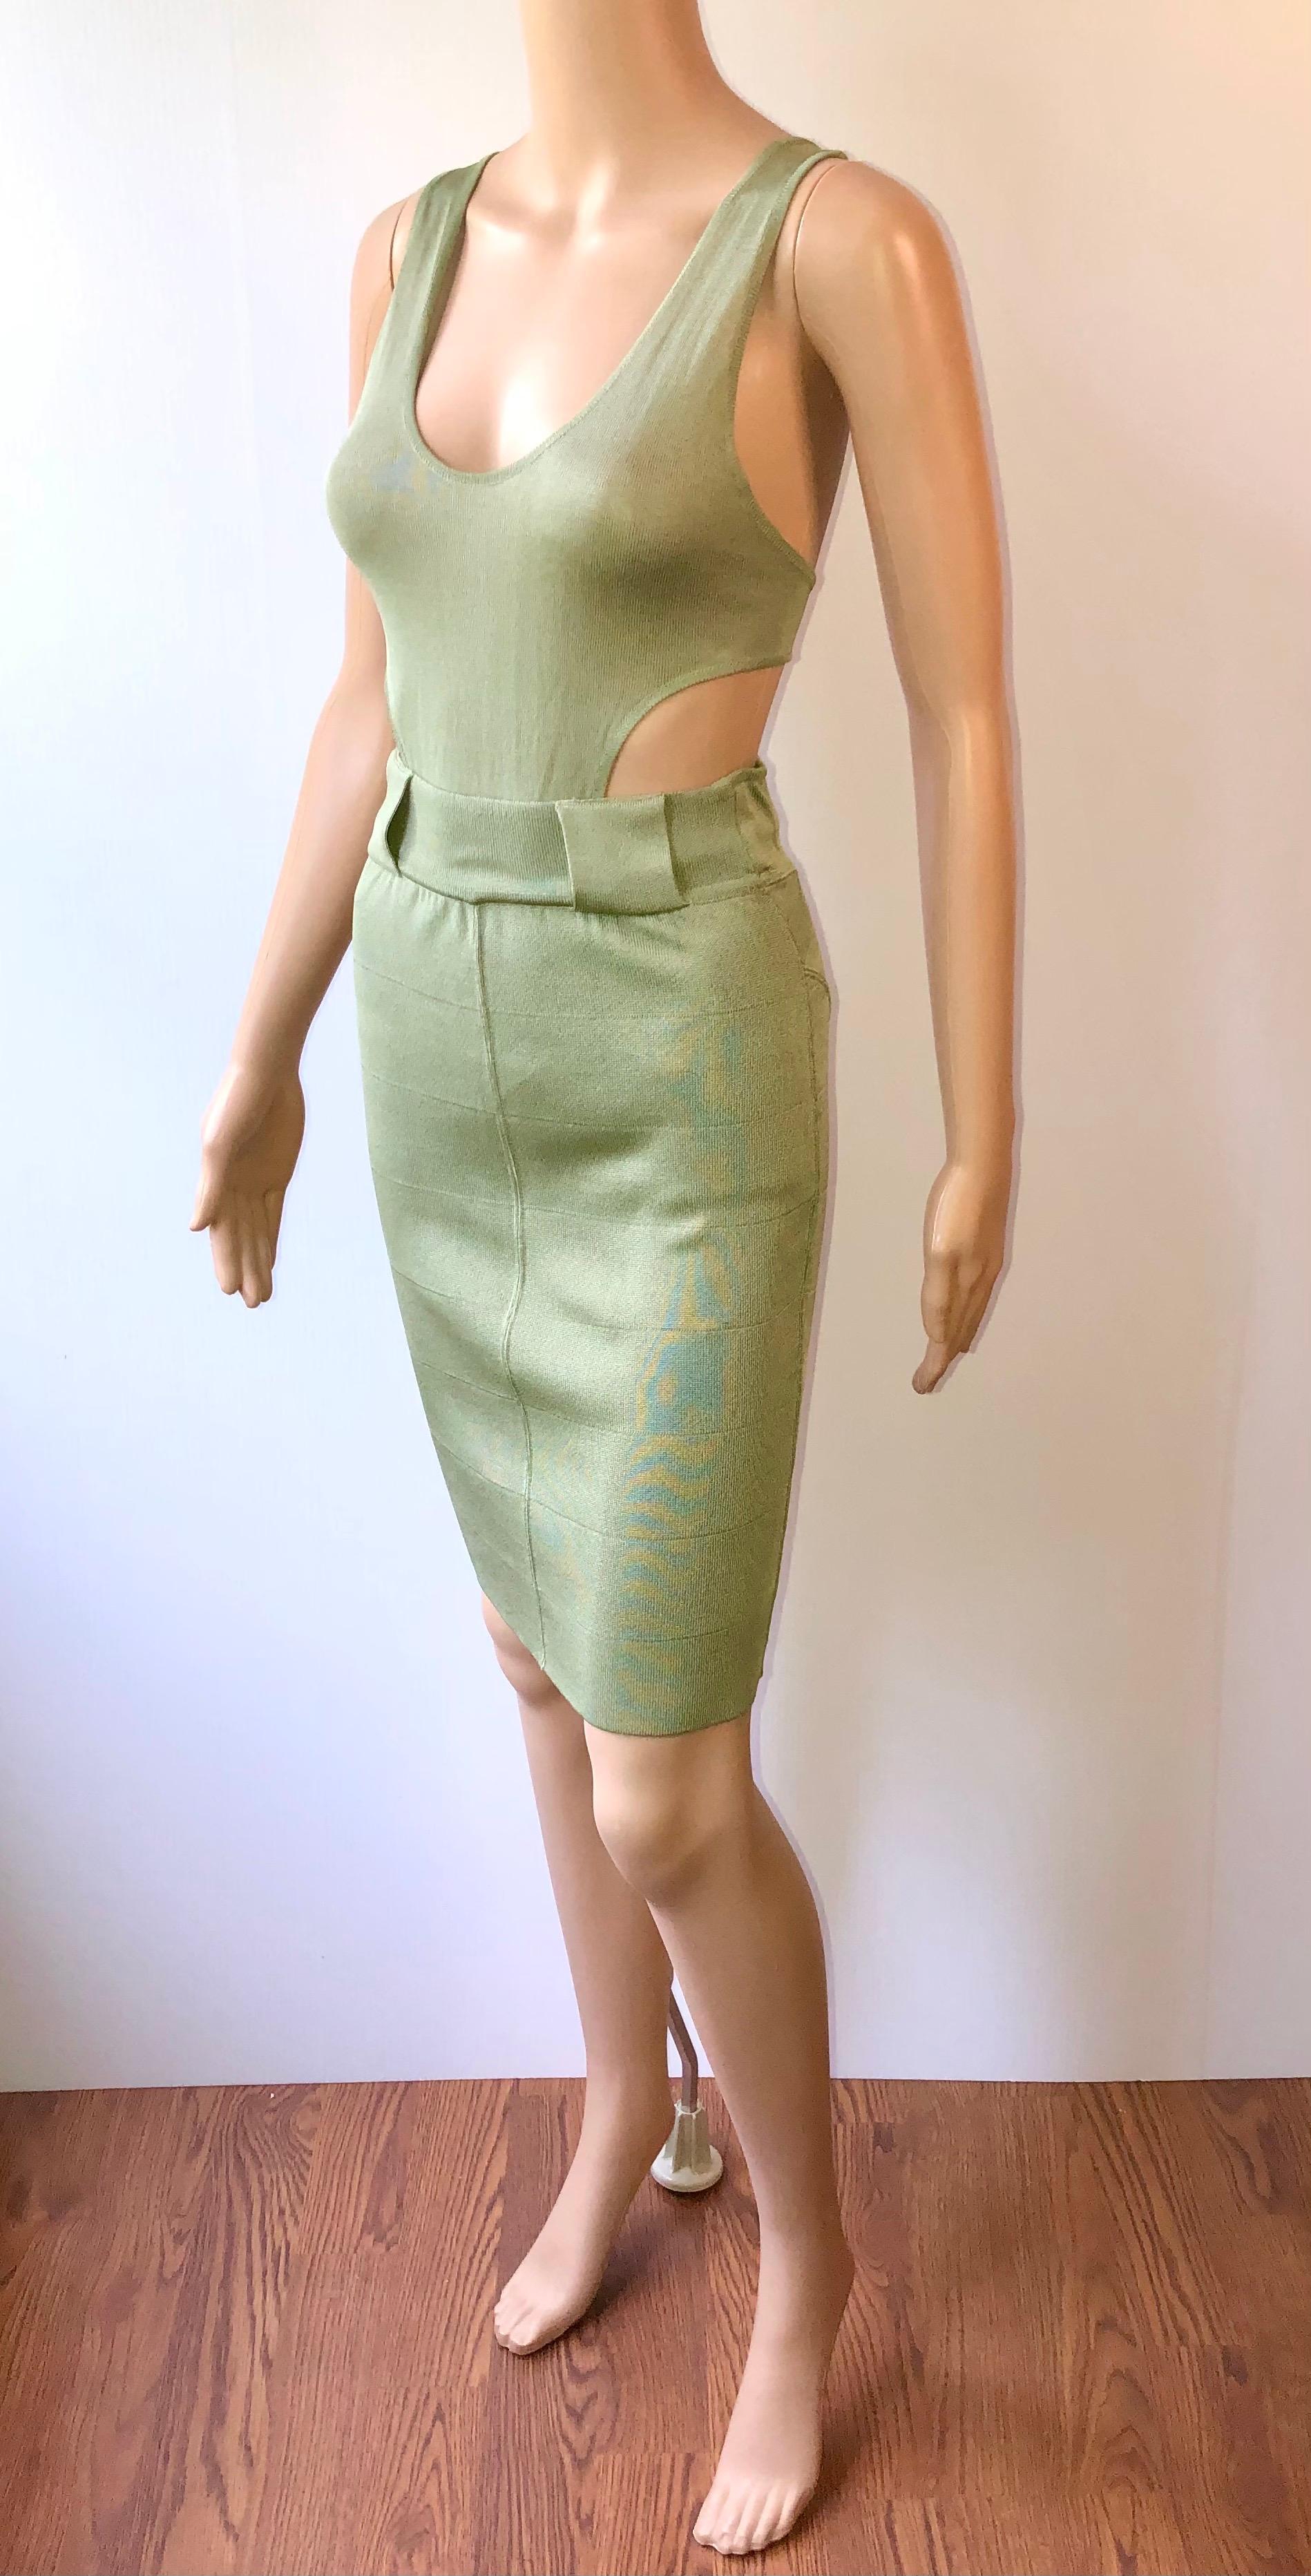 Women's Azzedine Alaia S/S 1985 Vintage Plunged Cutout Bodycon Green Dress